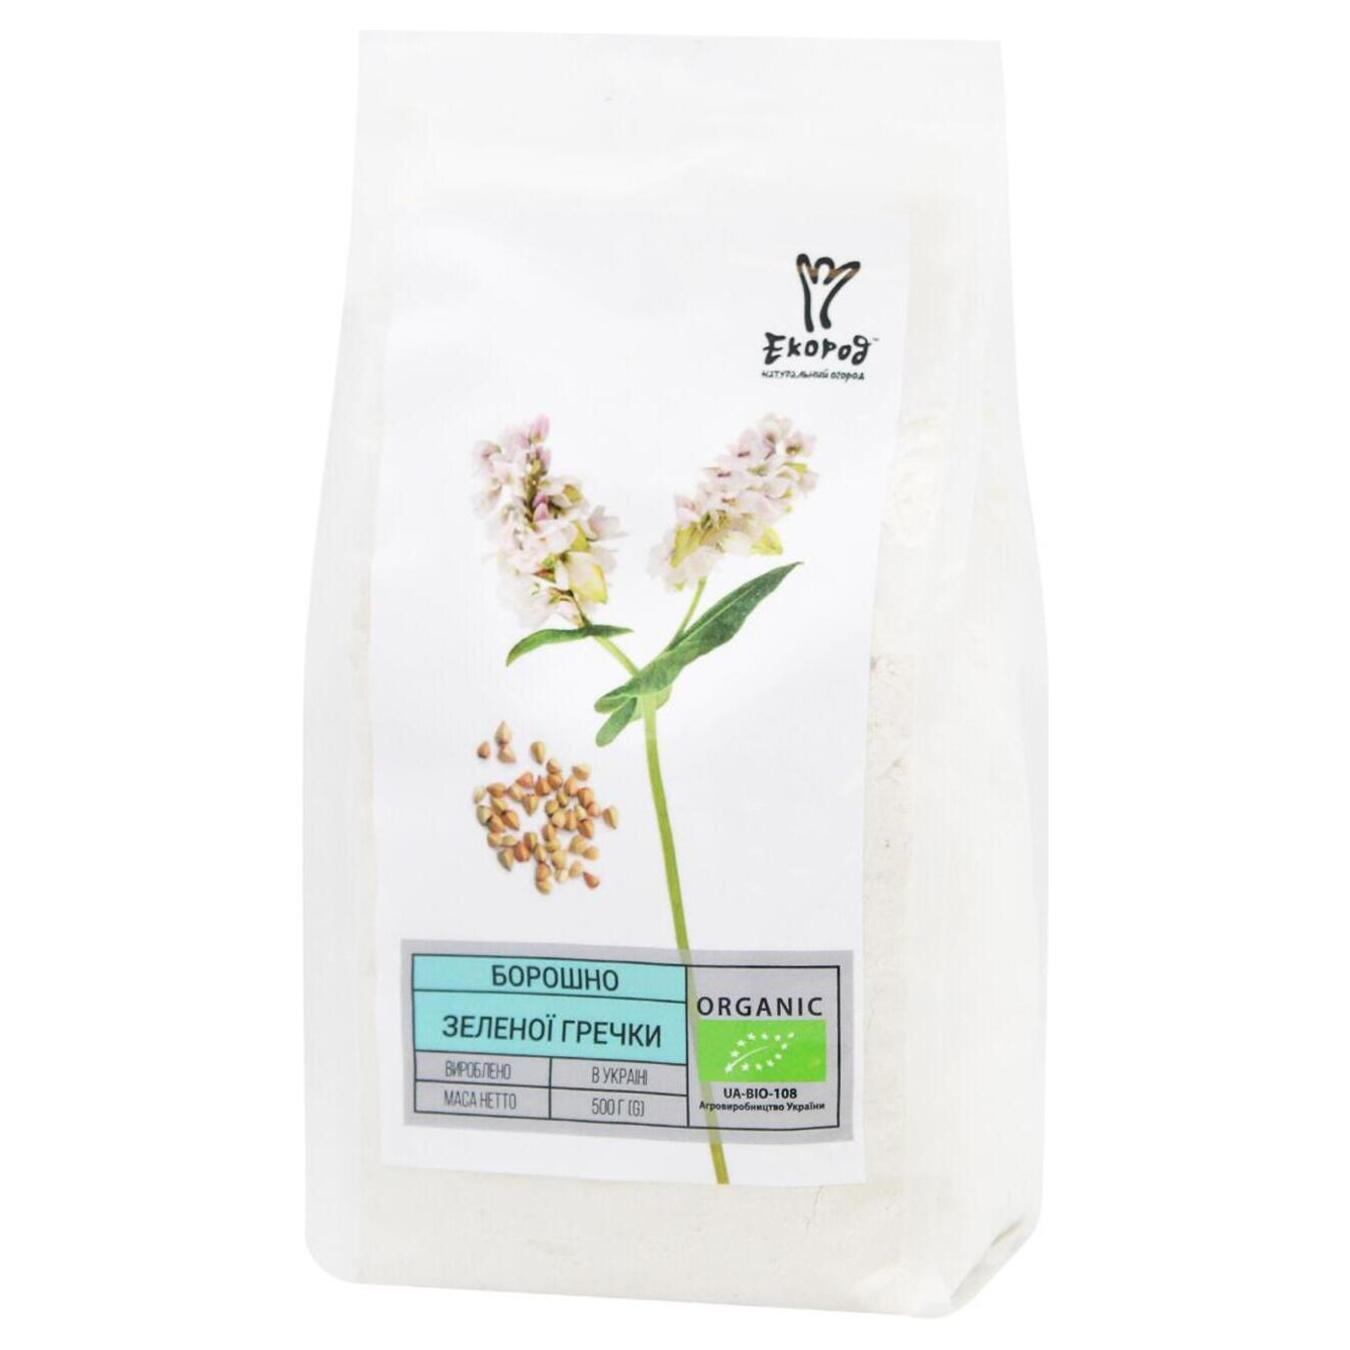 Organic Ekorod green buckwheat flour 500g